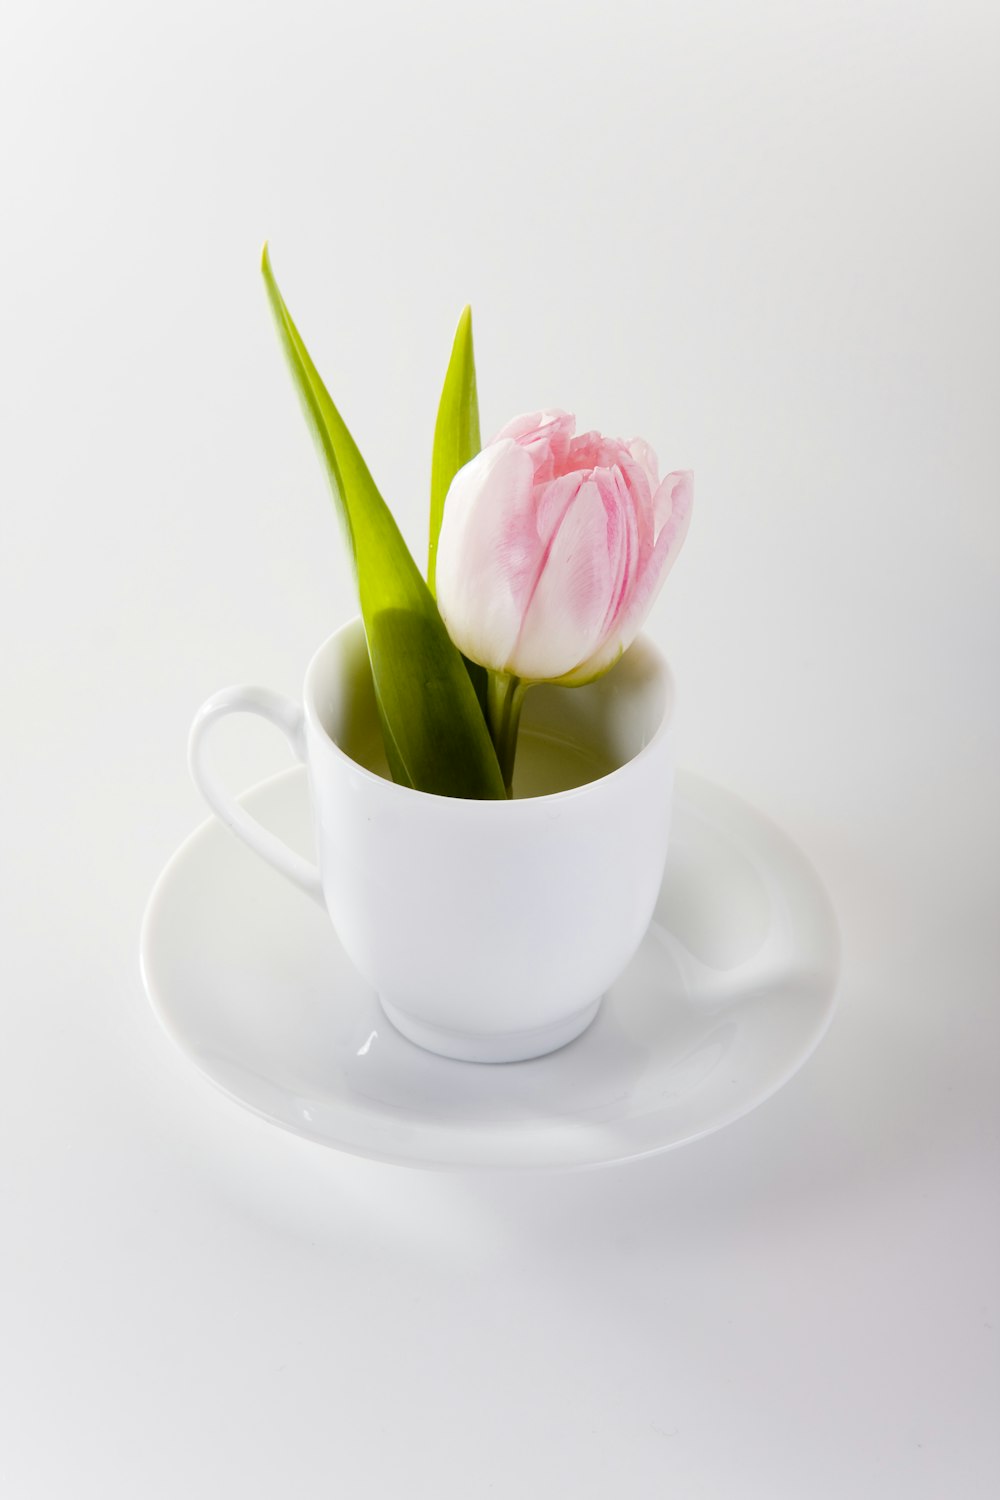 rosa rosa na xícara de chá de cerâmica branca